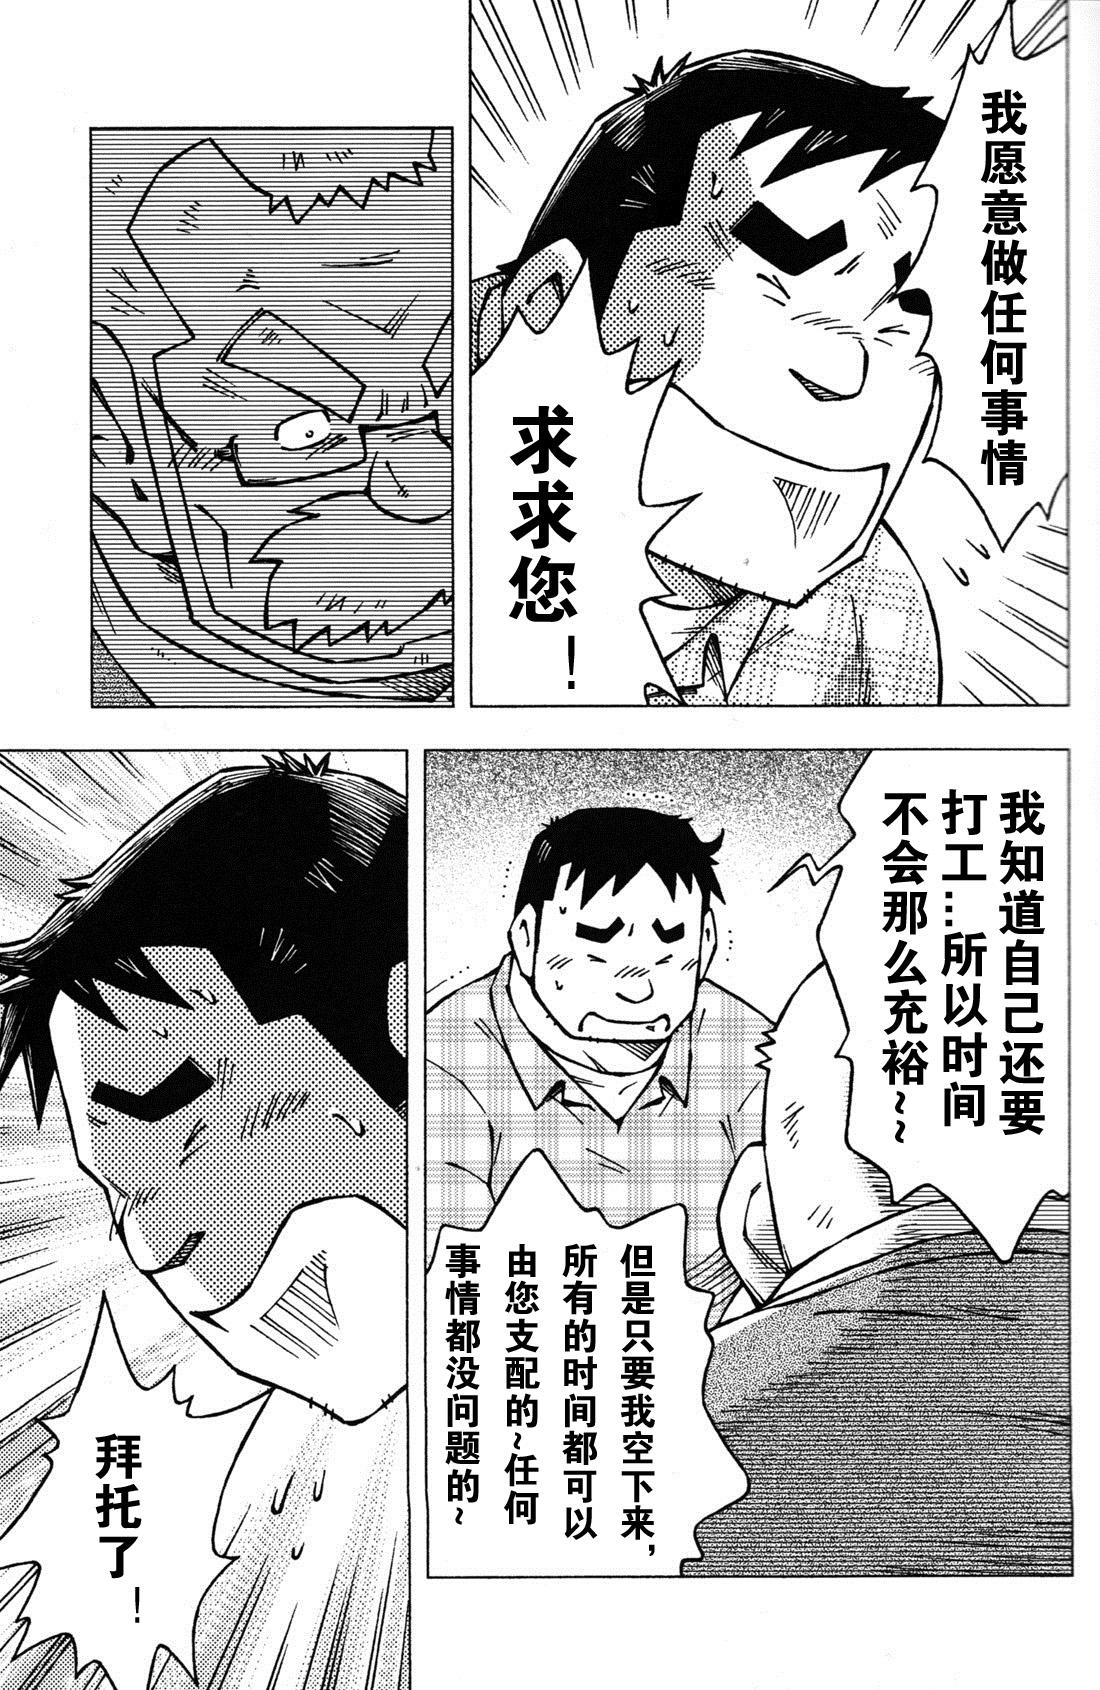 Joi Sensei no Tokoro e Class - Page 7